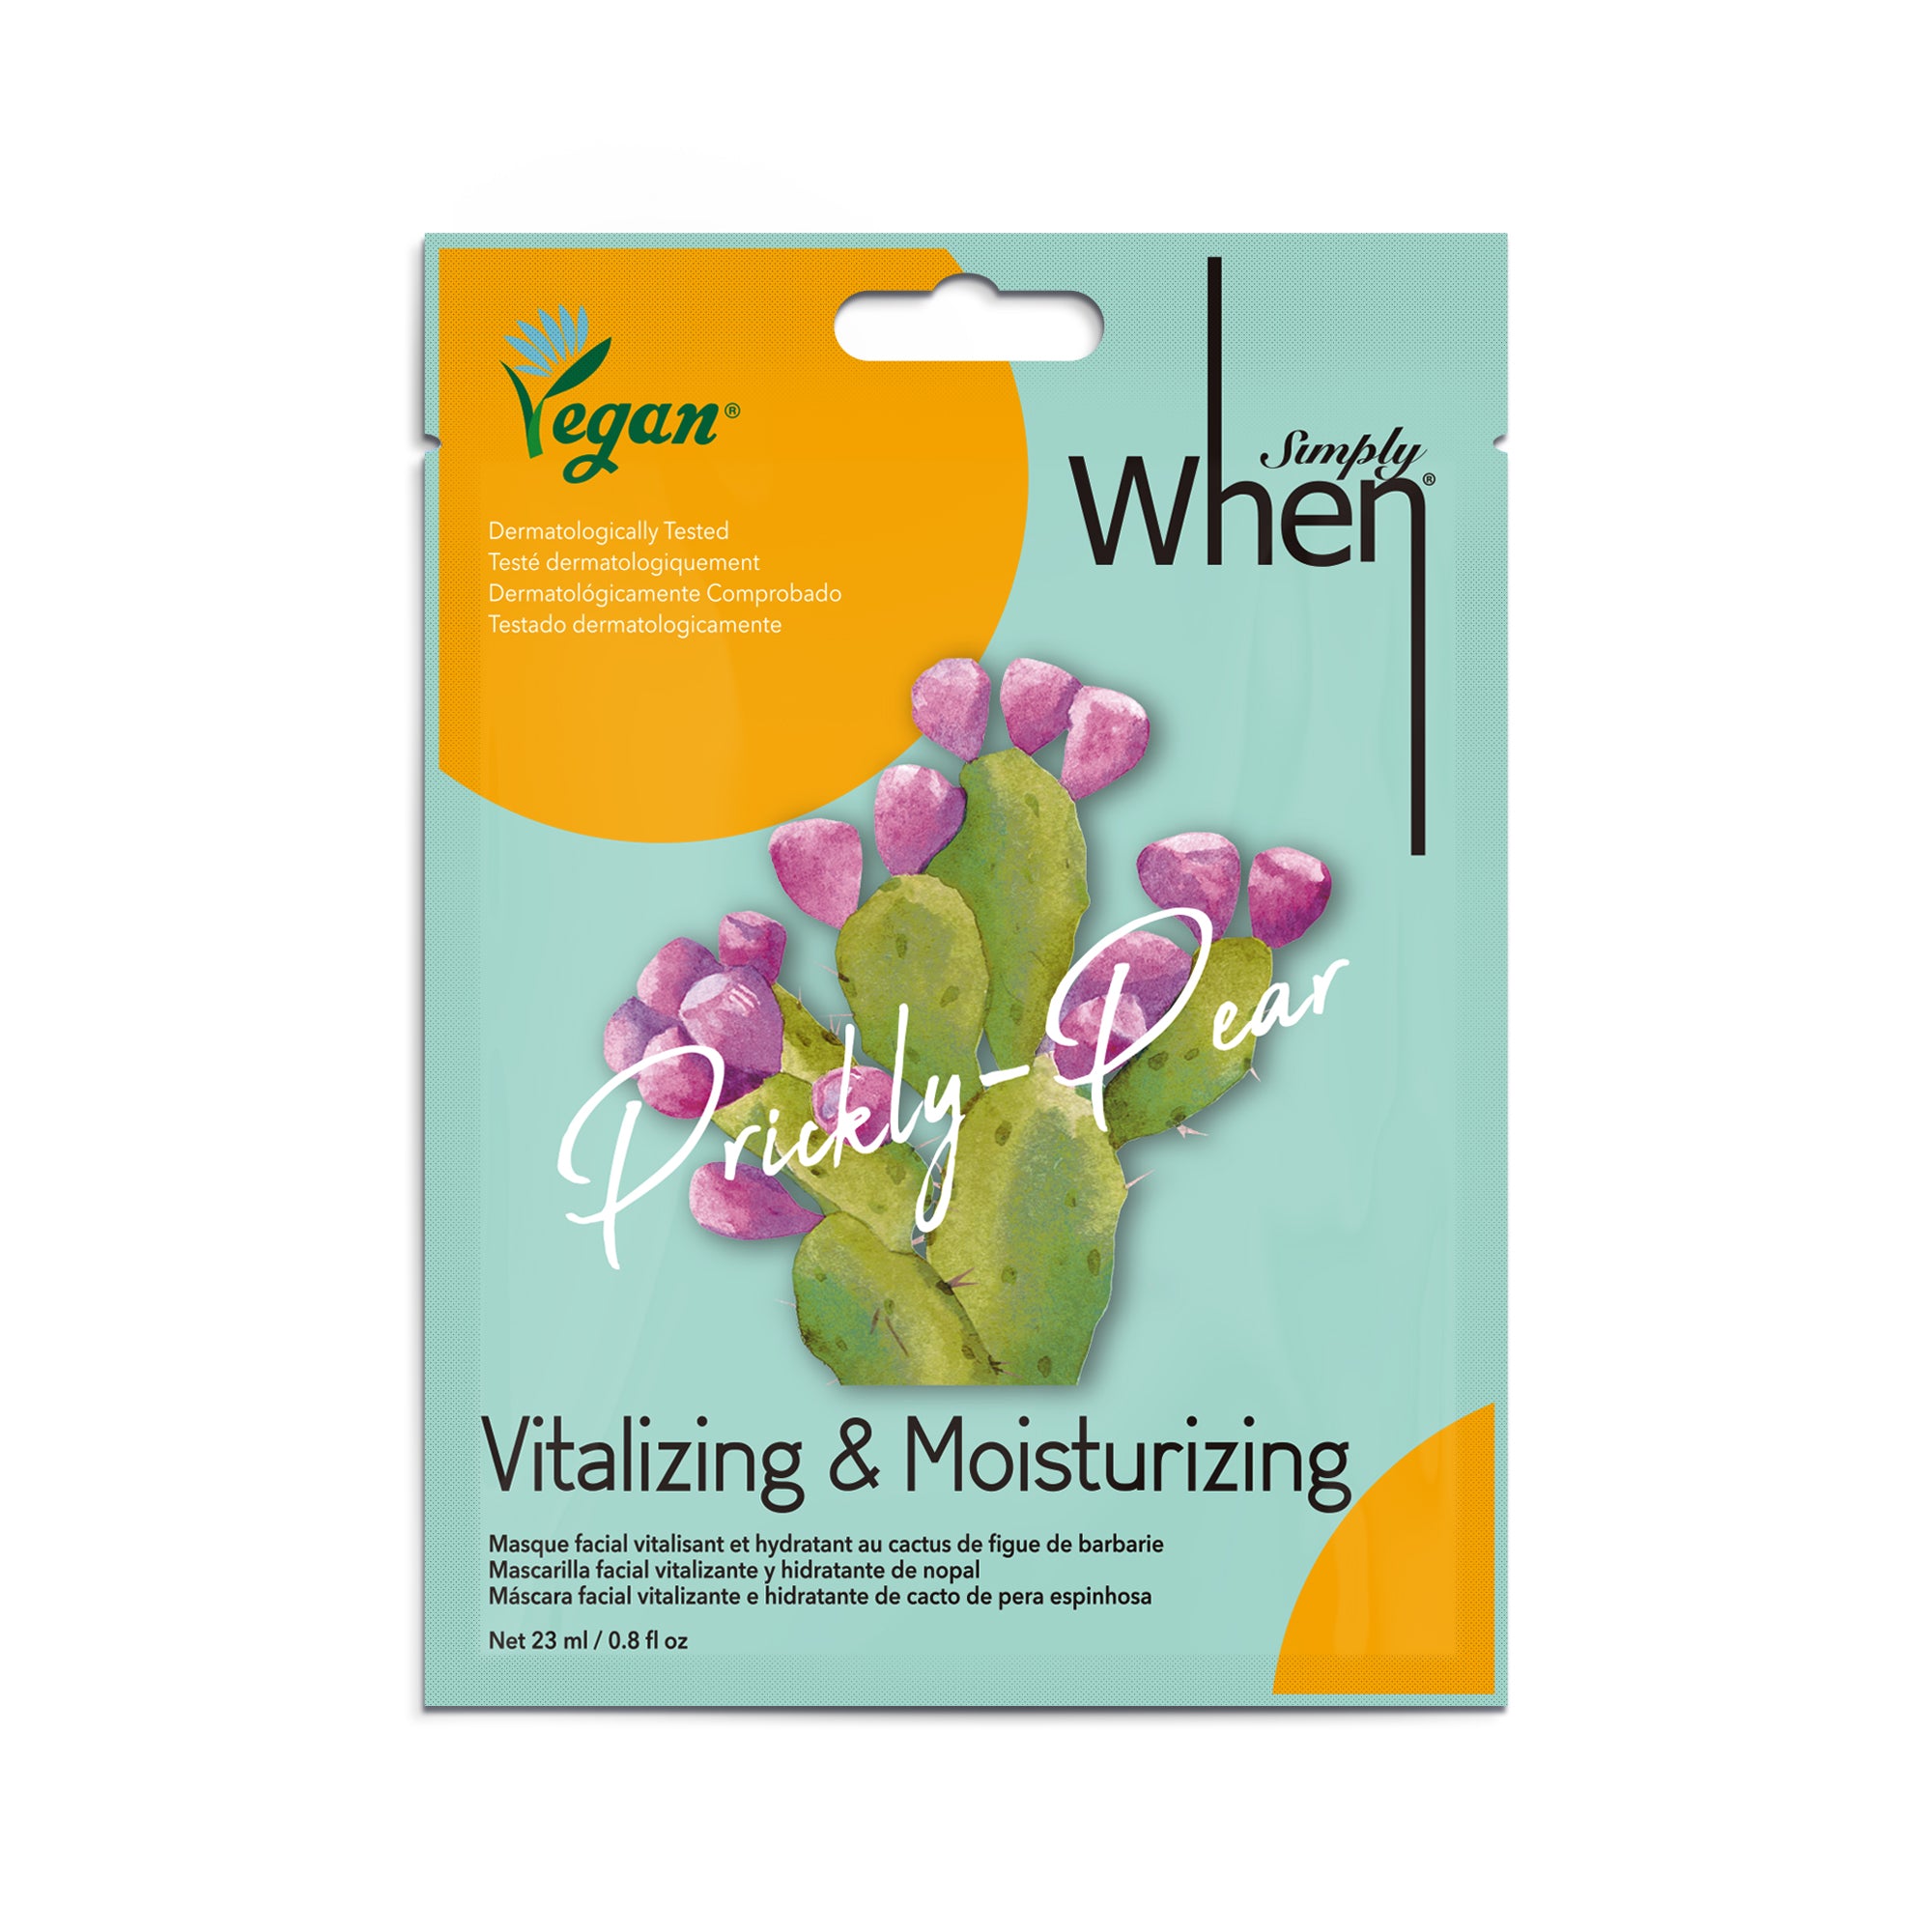 Simply When Vegan Prickly-Pear Vitalizing & Moisturizing Mask